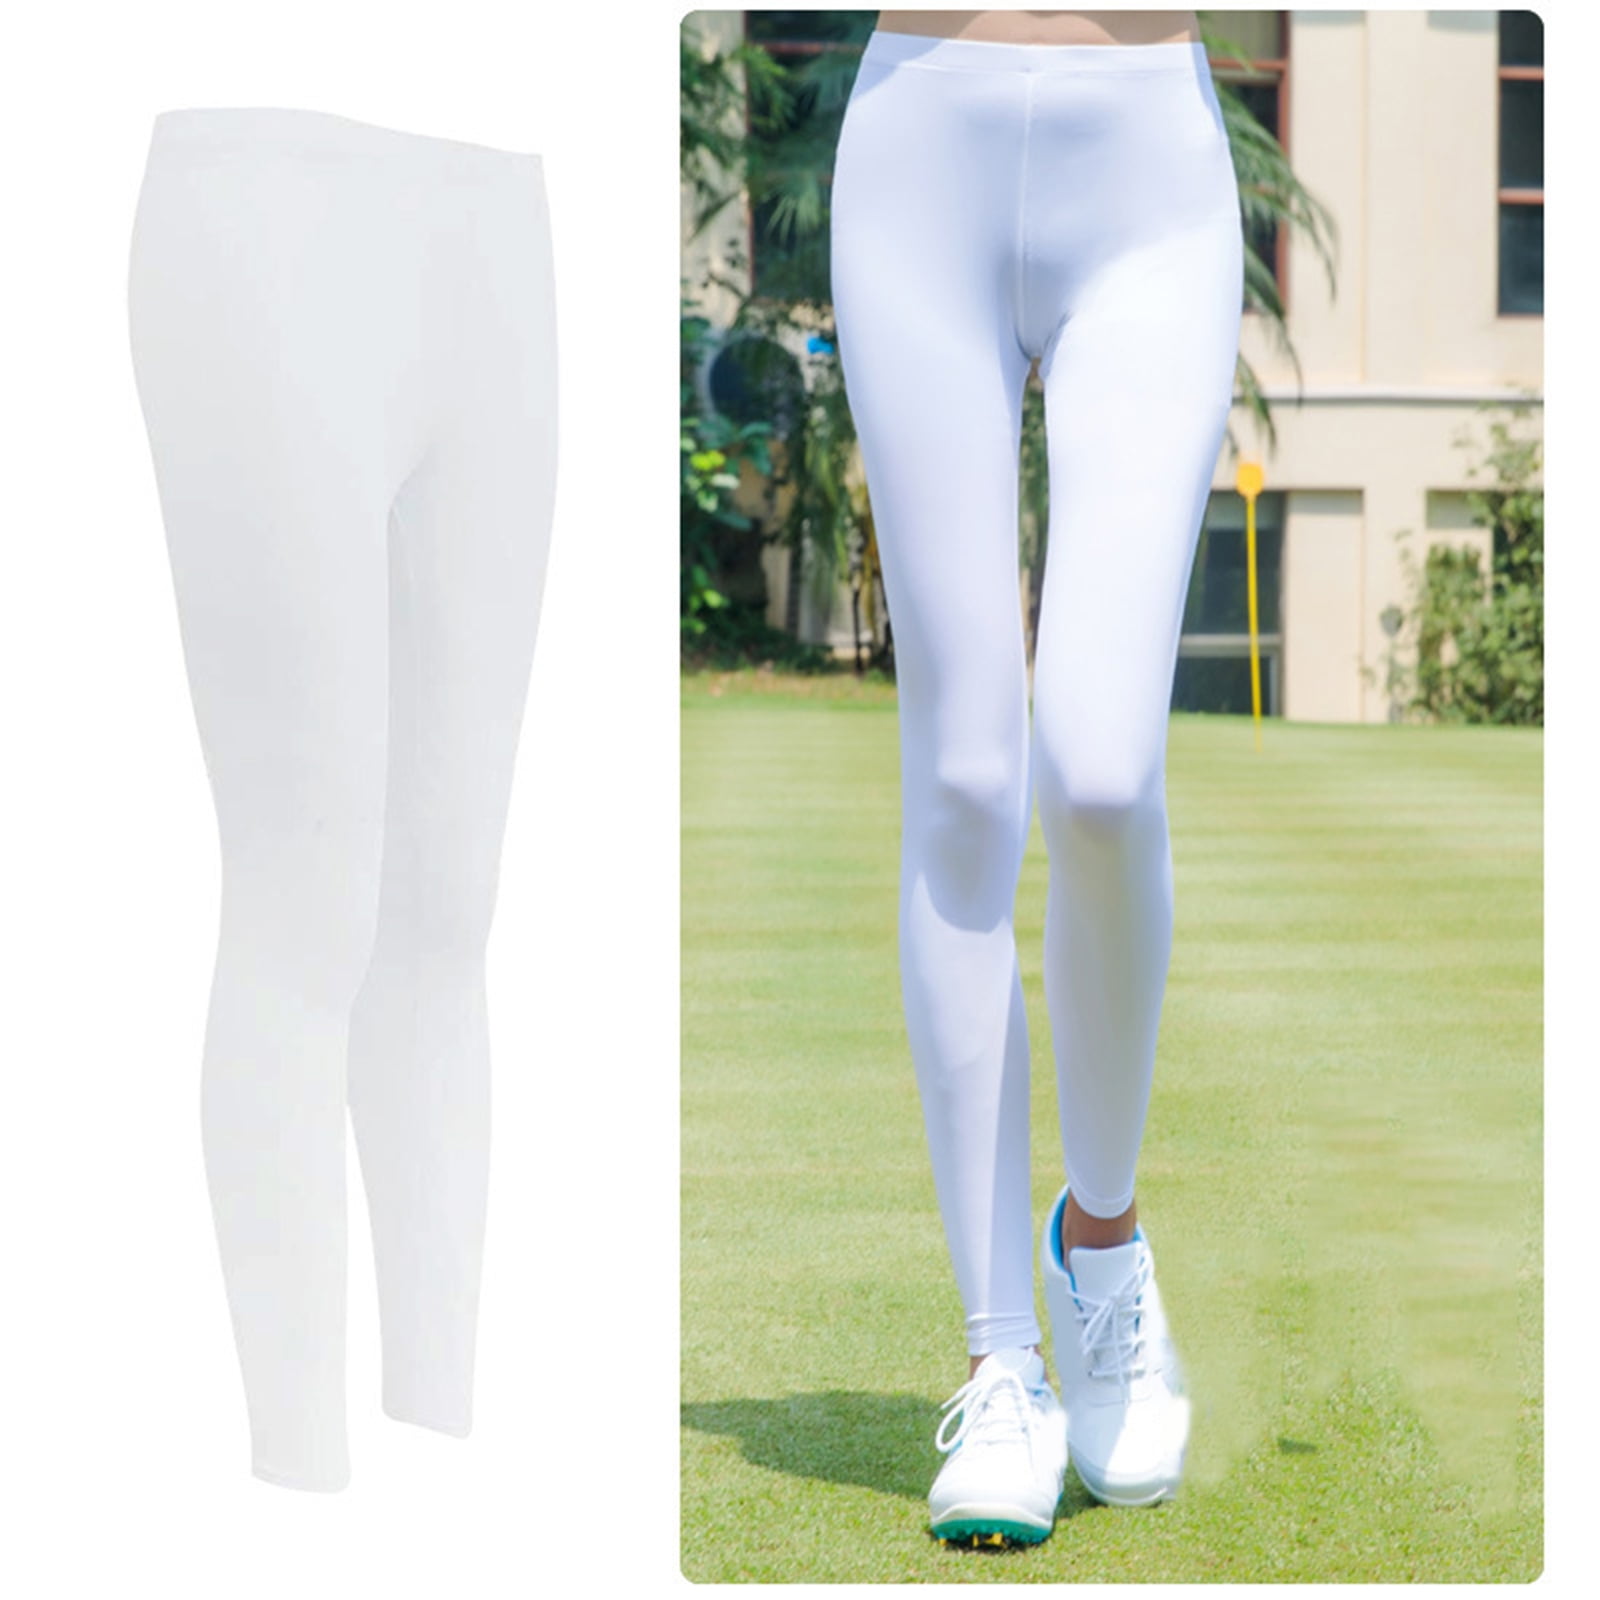 Women Elastic Legging Stocking Lady Girls Sunscreen Panty-Hose Golf Pants  Uv-Proof Tennis/Badminton Stocking Long Leg Socks